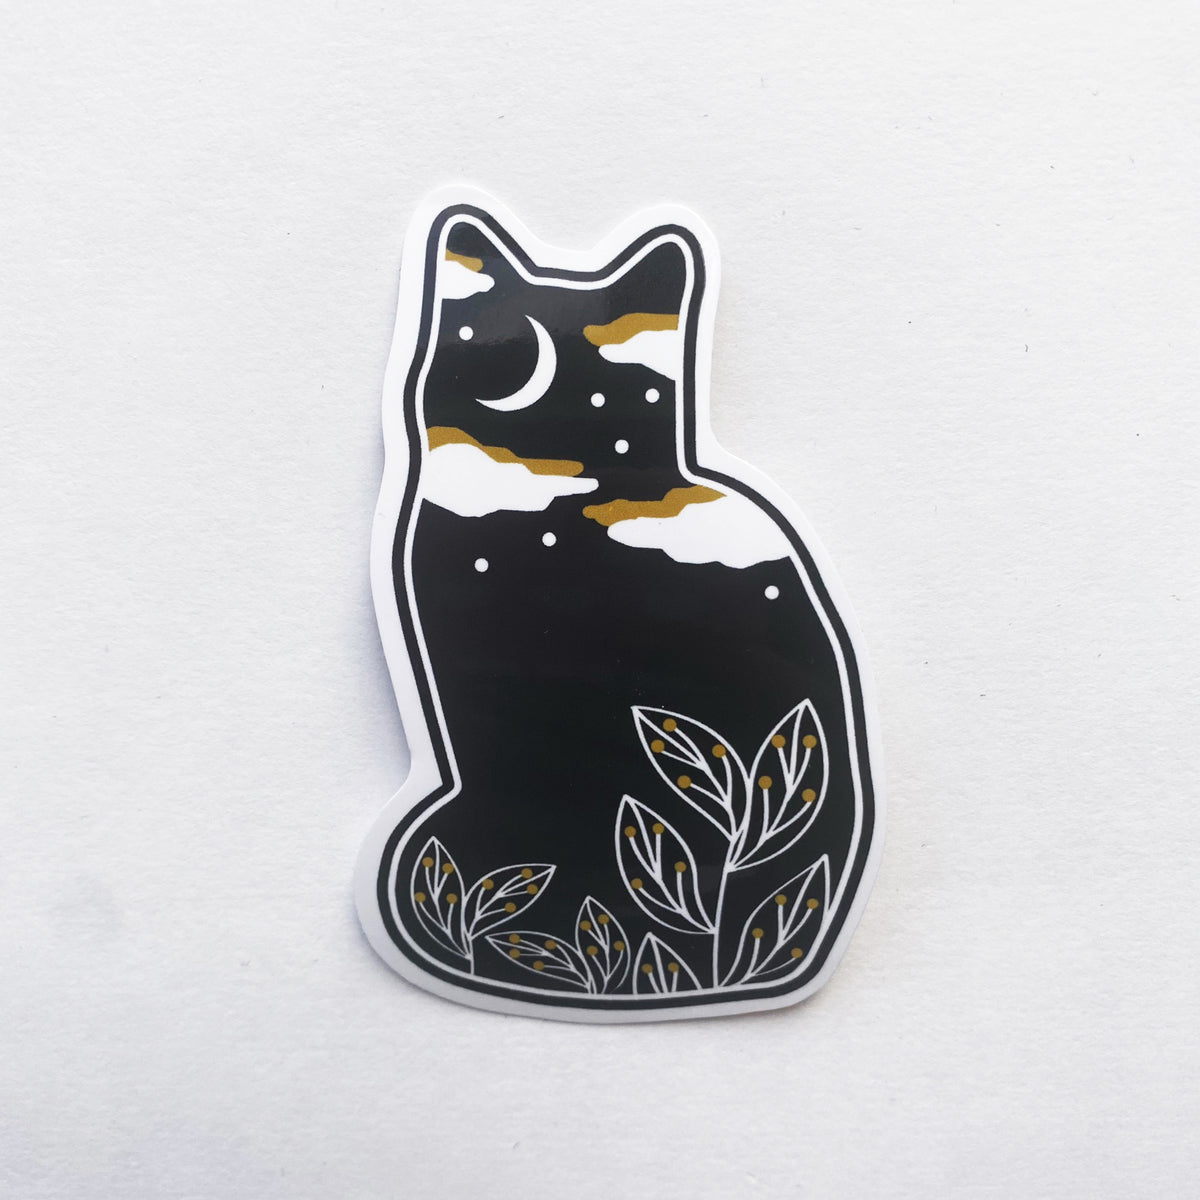 Nature Botanical Black Cat Decal Vinyl Sticker